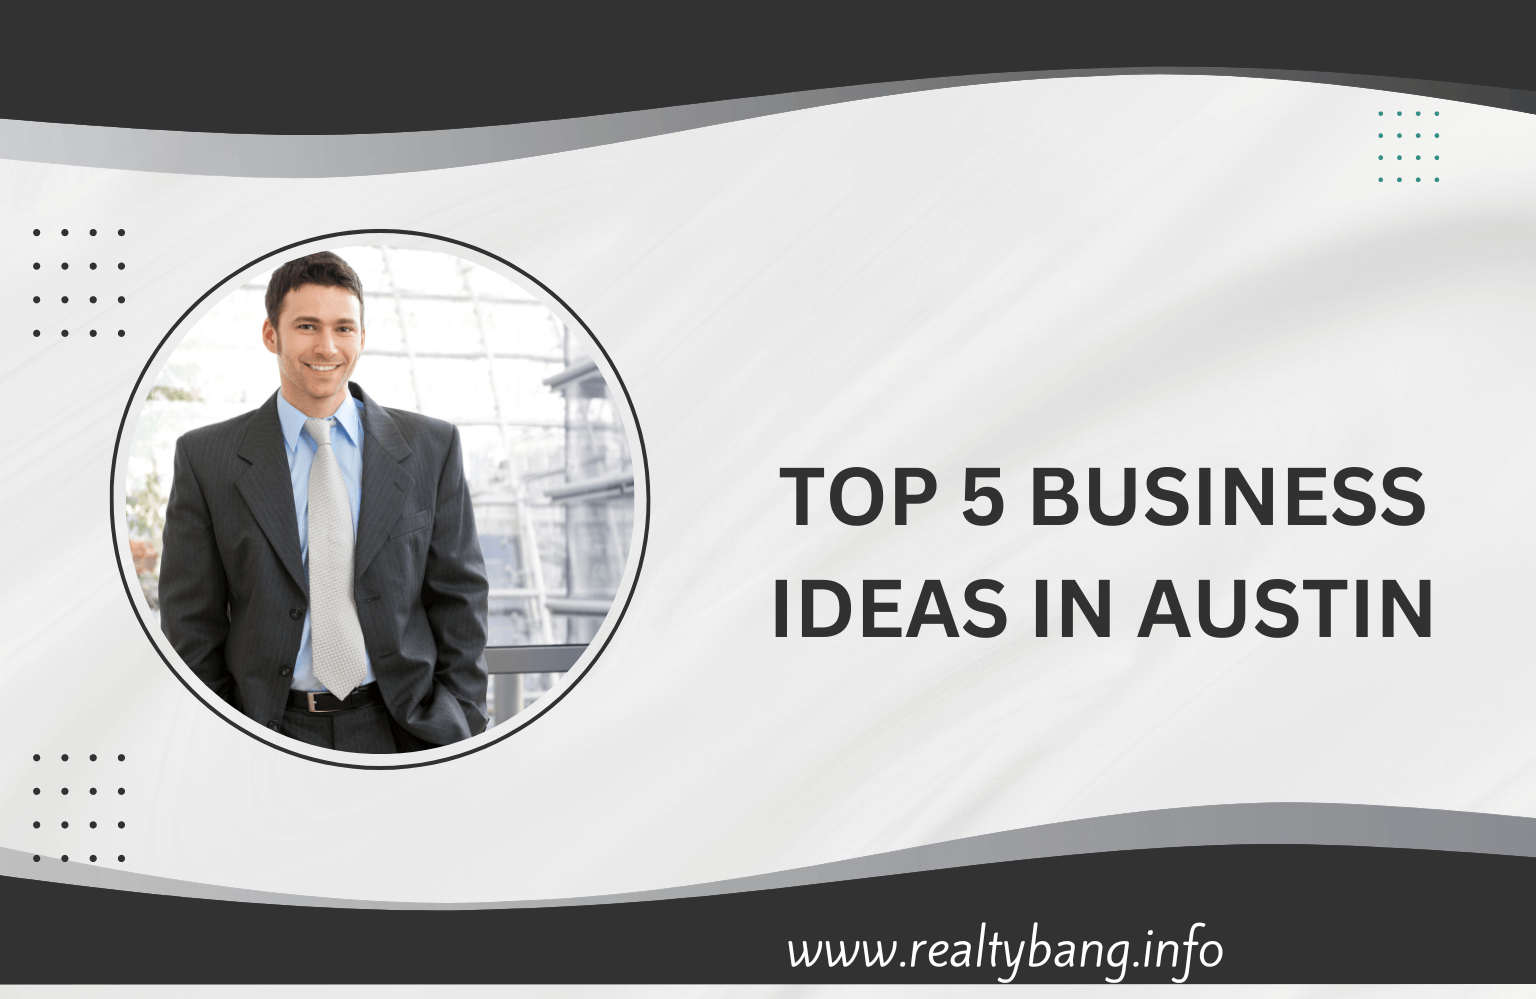 TOP 5 BUSINESS IDEAS IN AUSTIN